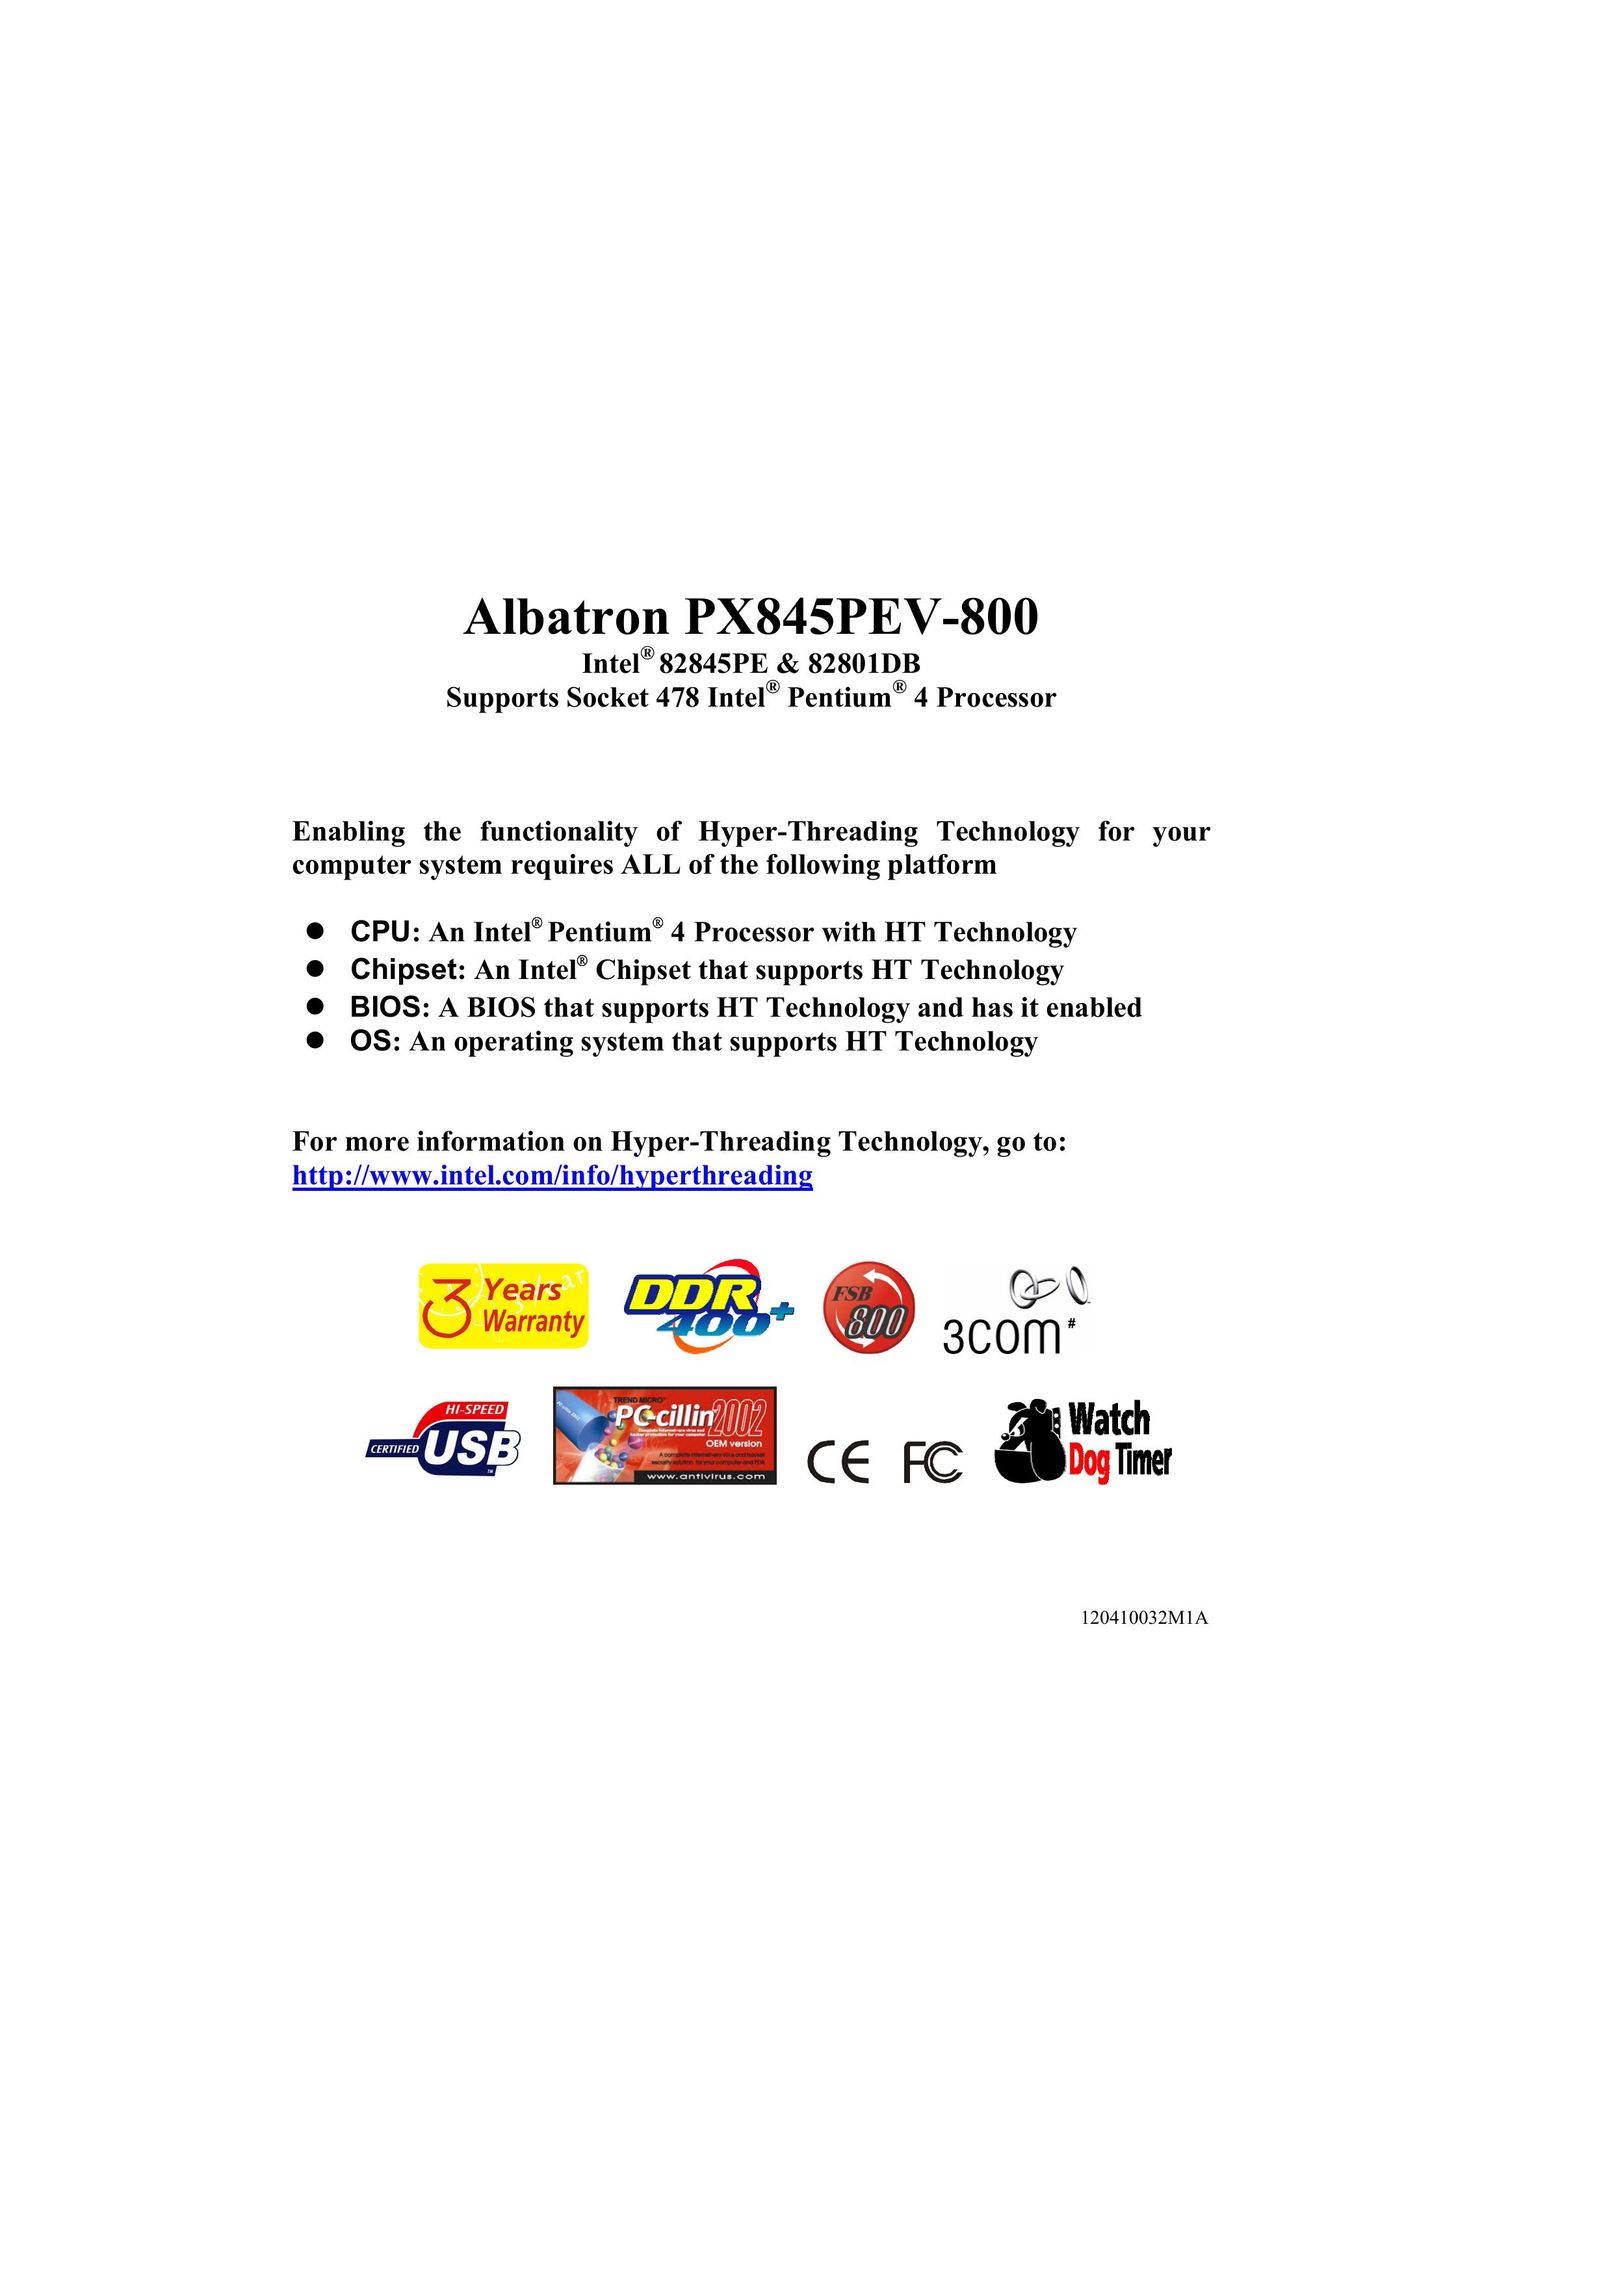 Albatron Technology PX845PEV-800 Computer Hardware User Manual